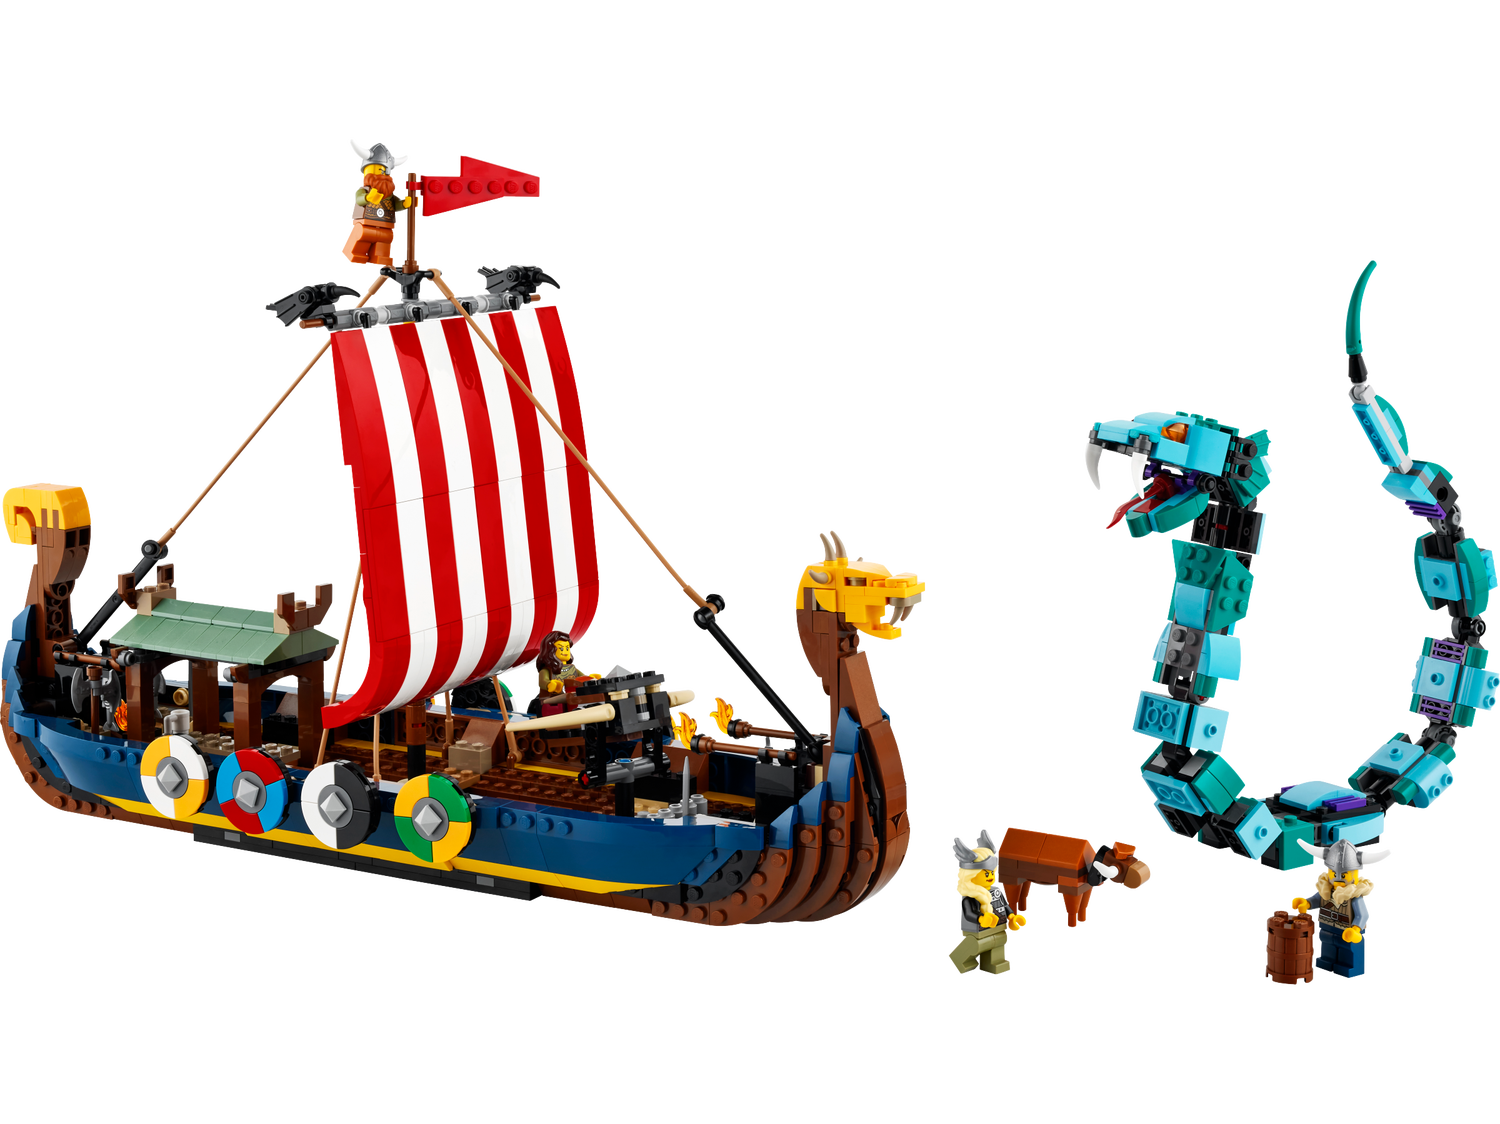 Viking Ship and the Midgard Serpent